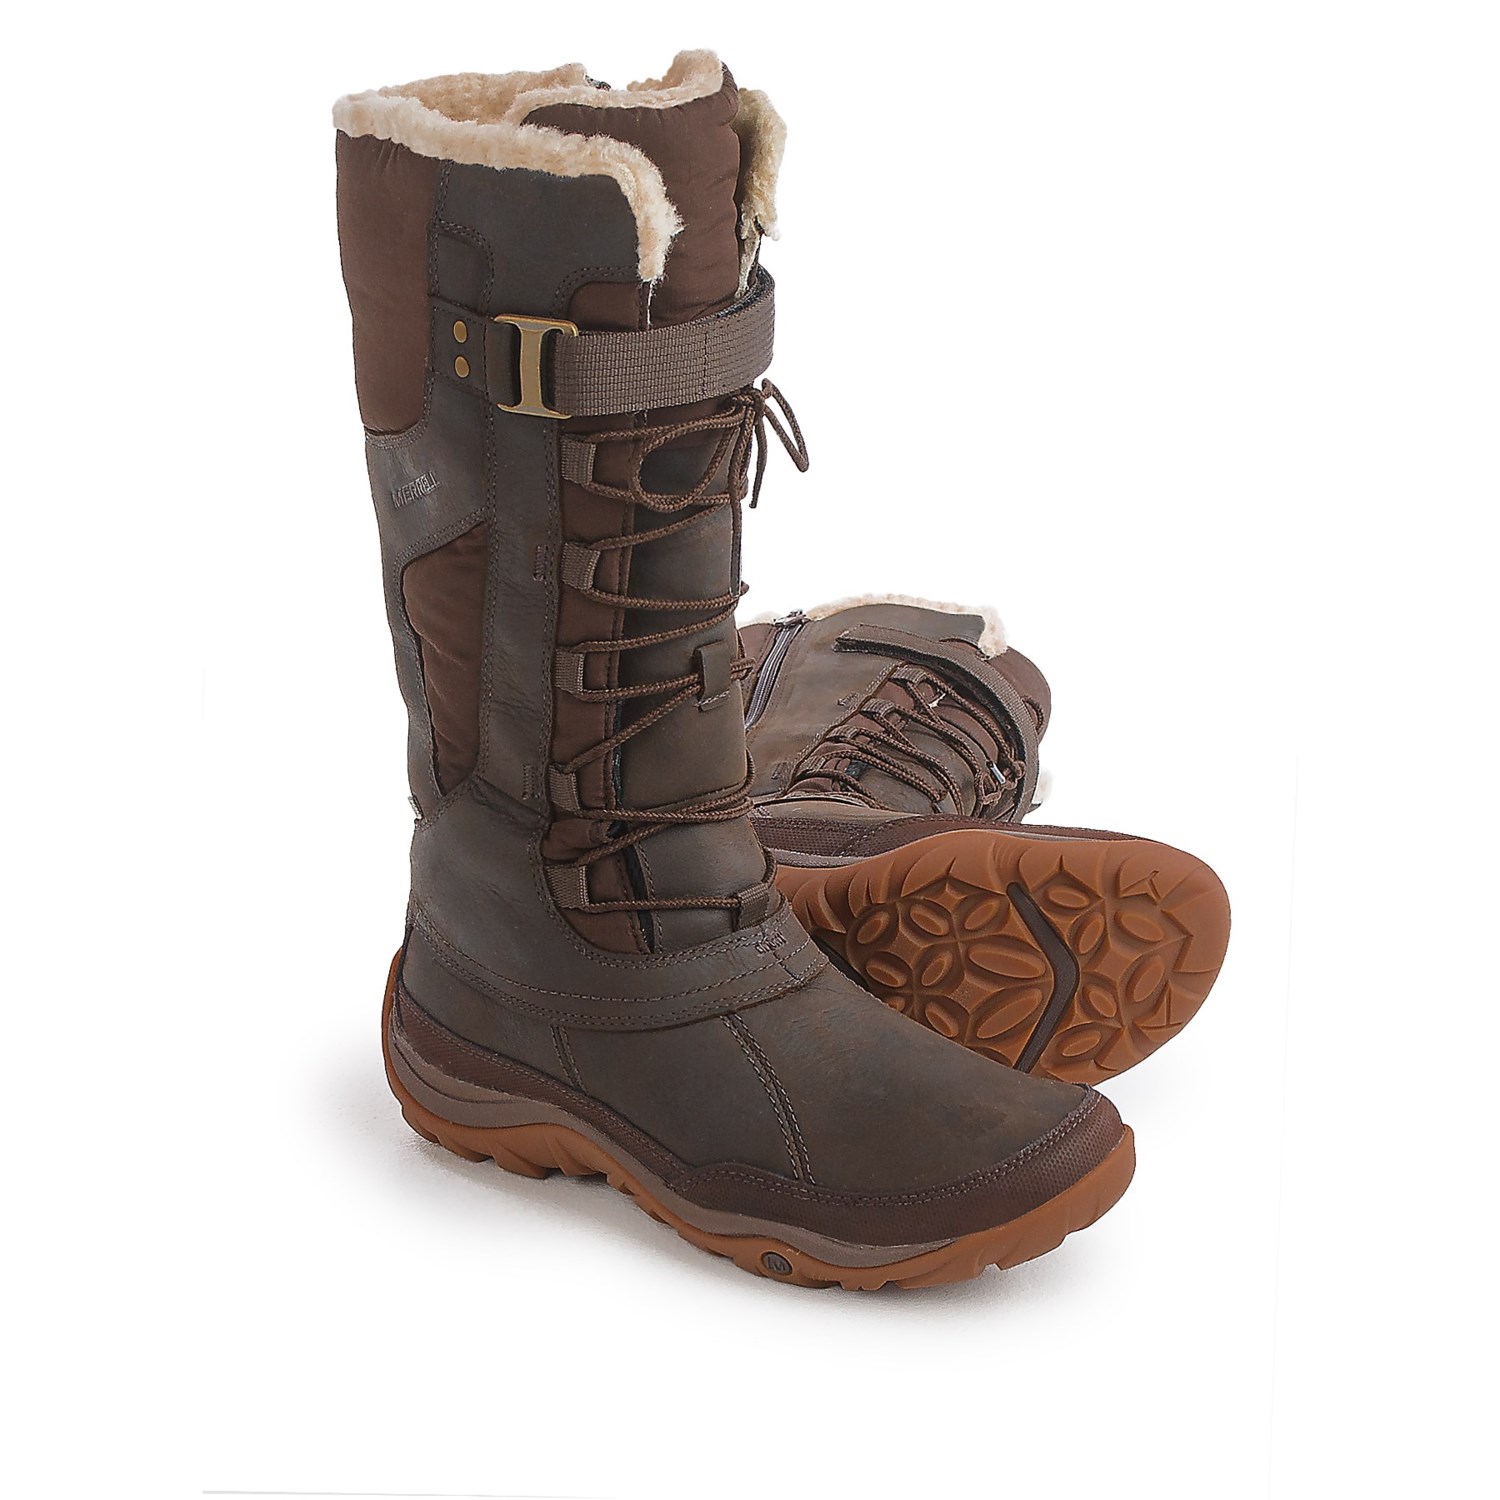 Merrell Murren Tall Leather Snow Boots – Waterproof, Insulated (For Women)